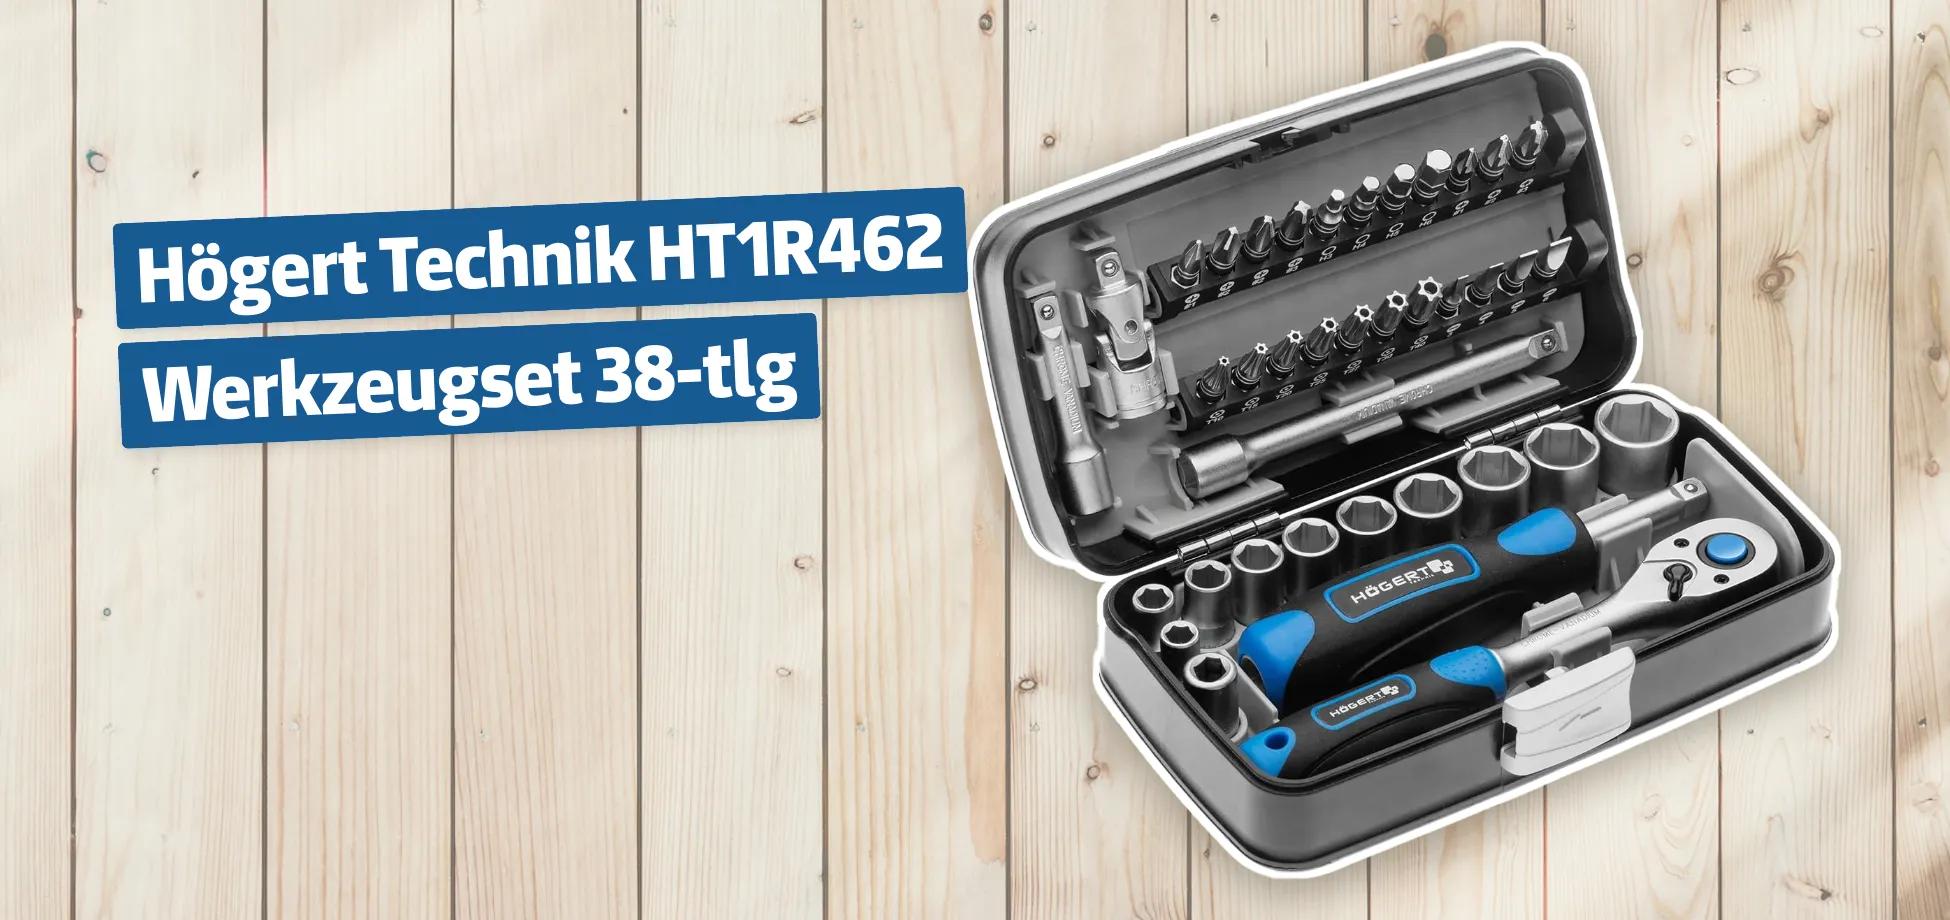 Högert Technik HT1R462 Werkzeugset 38-tlg